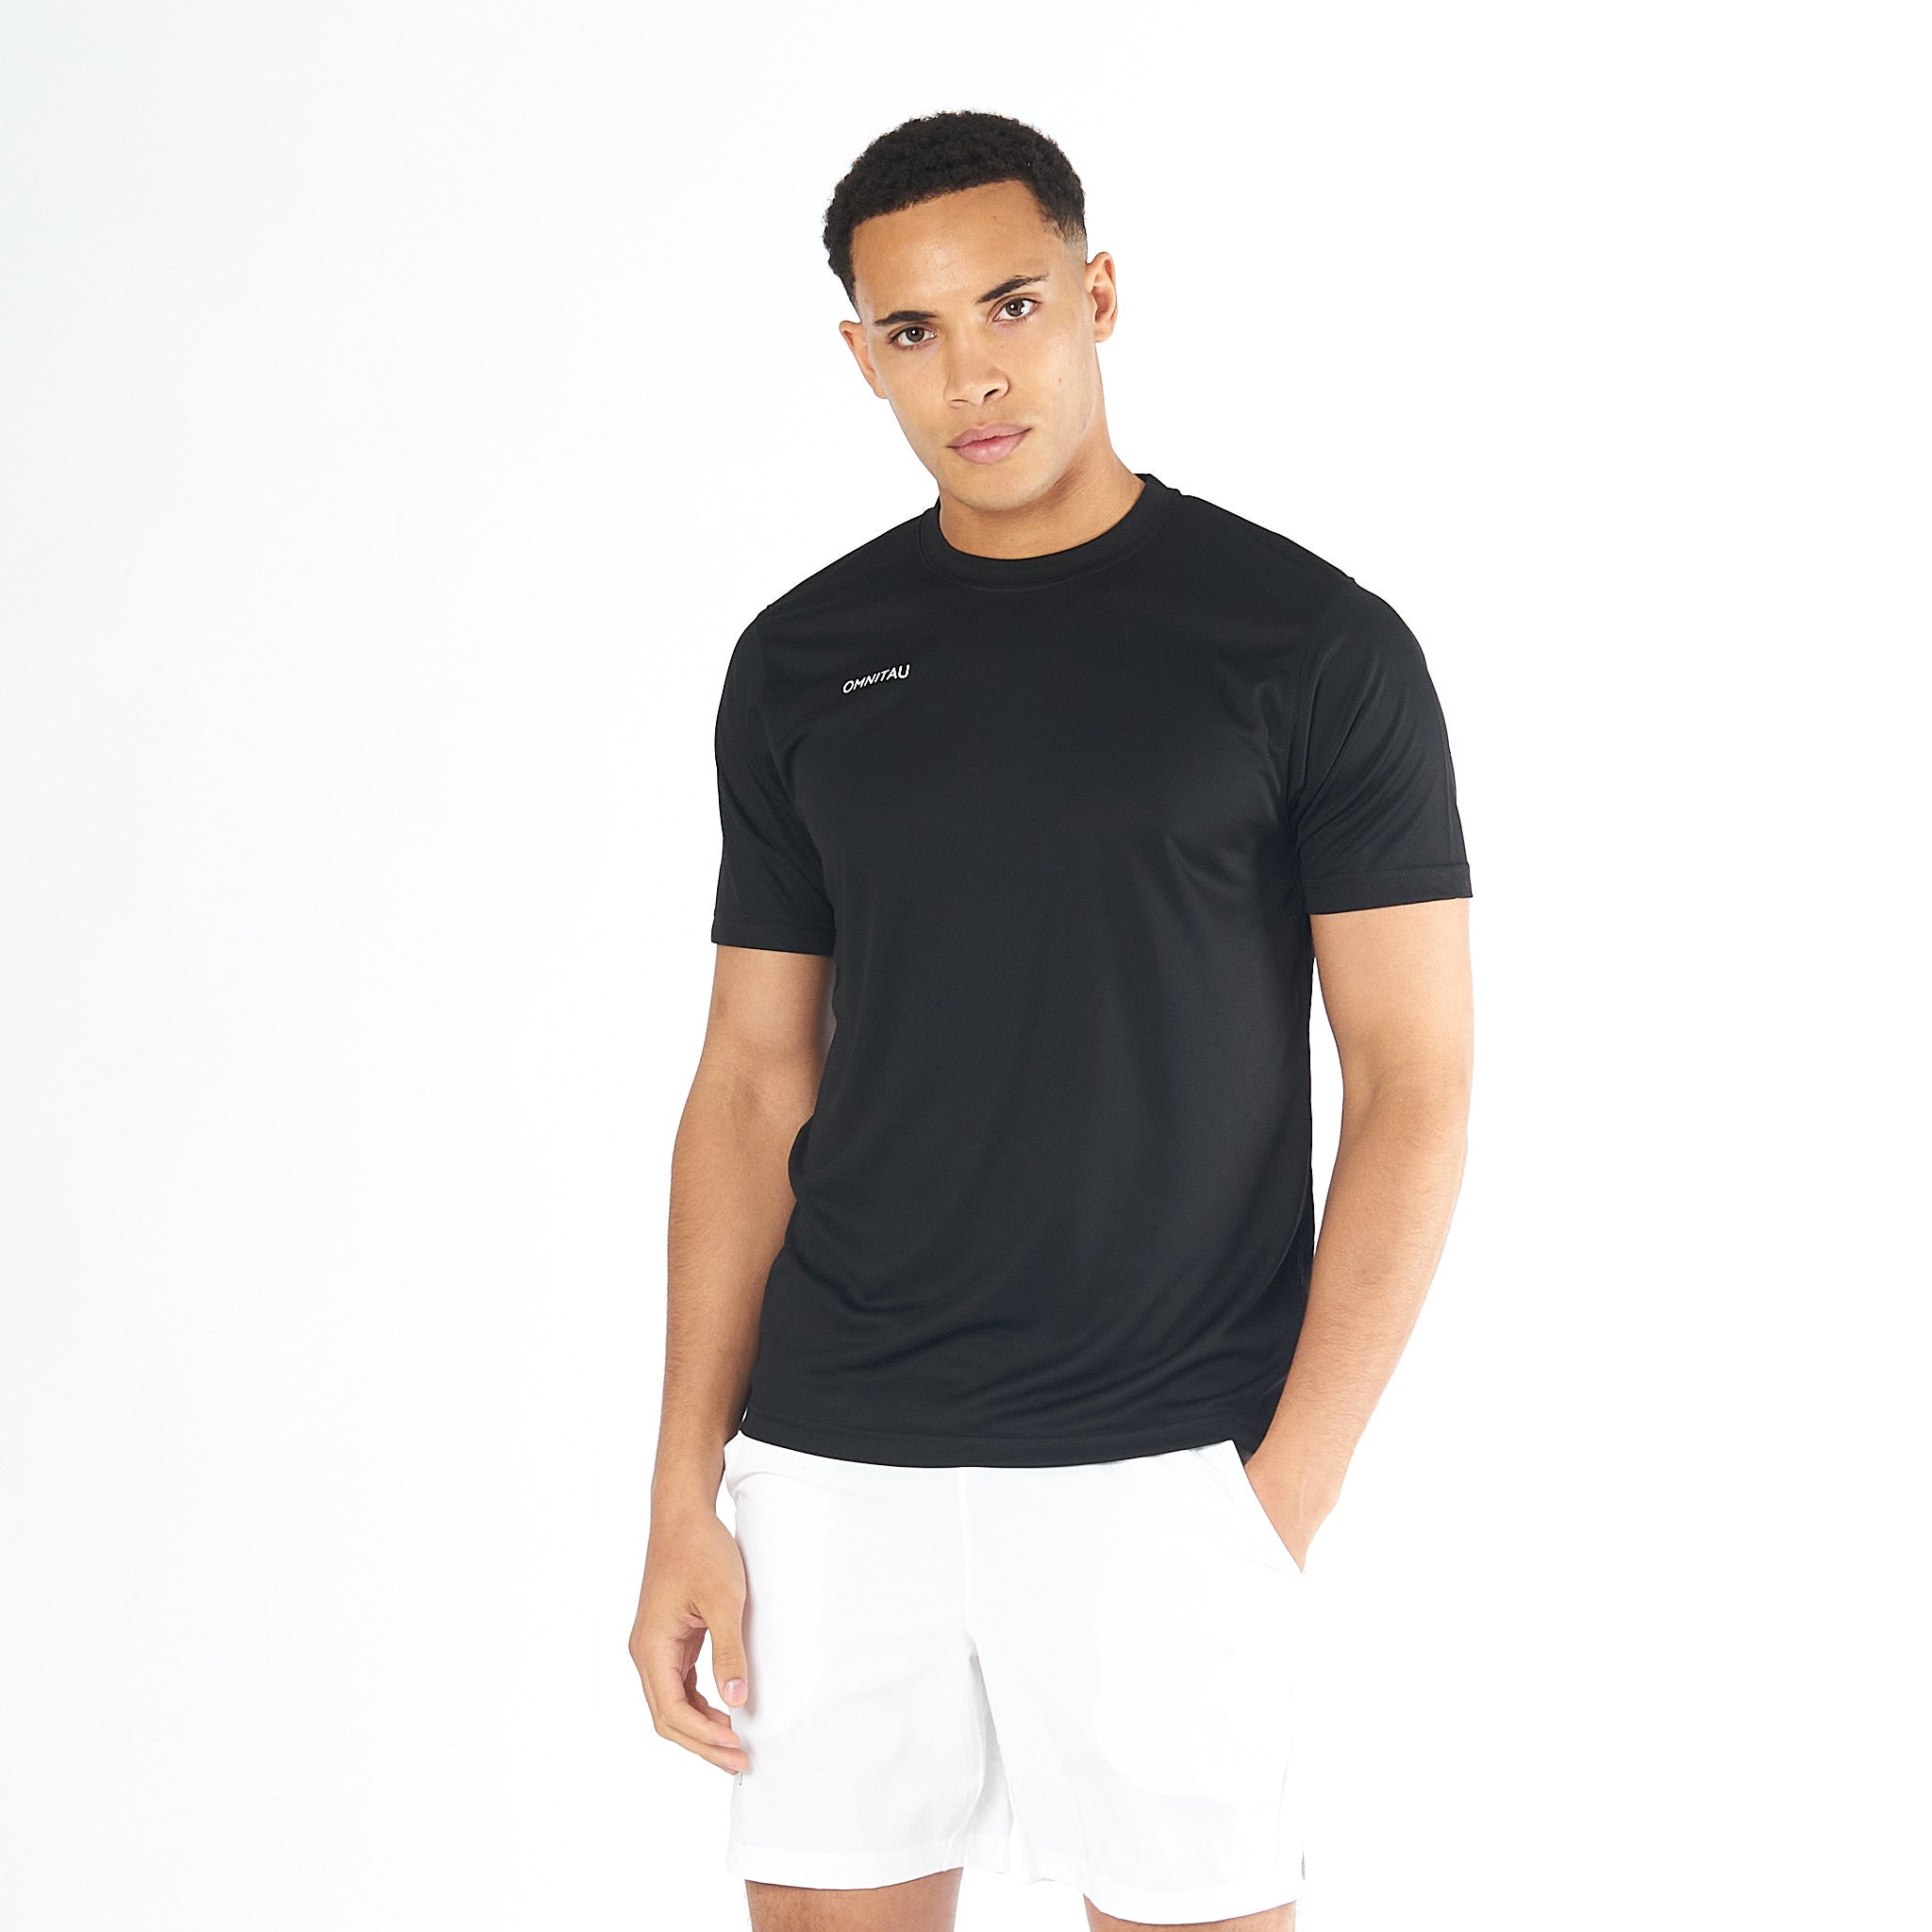 Omnitau Men's Team Sports Breathable Technical T-Shirt - Black